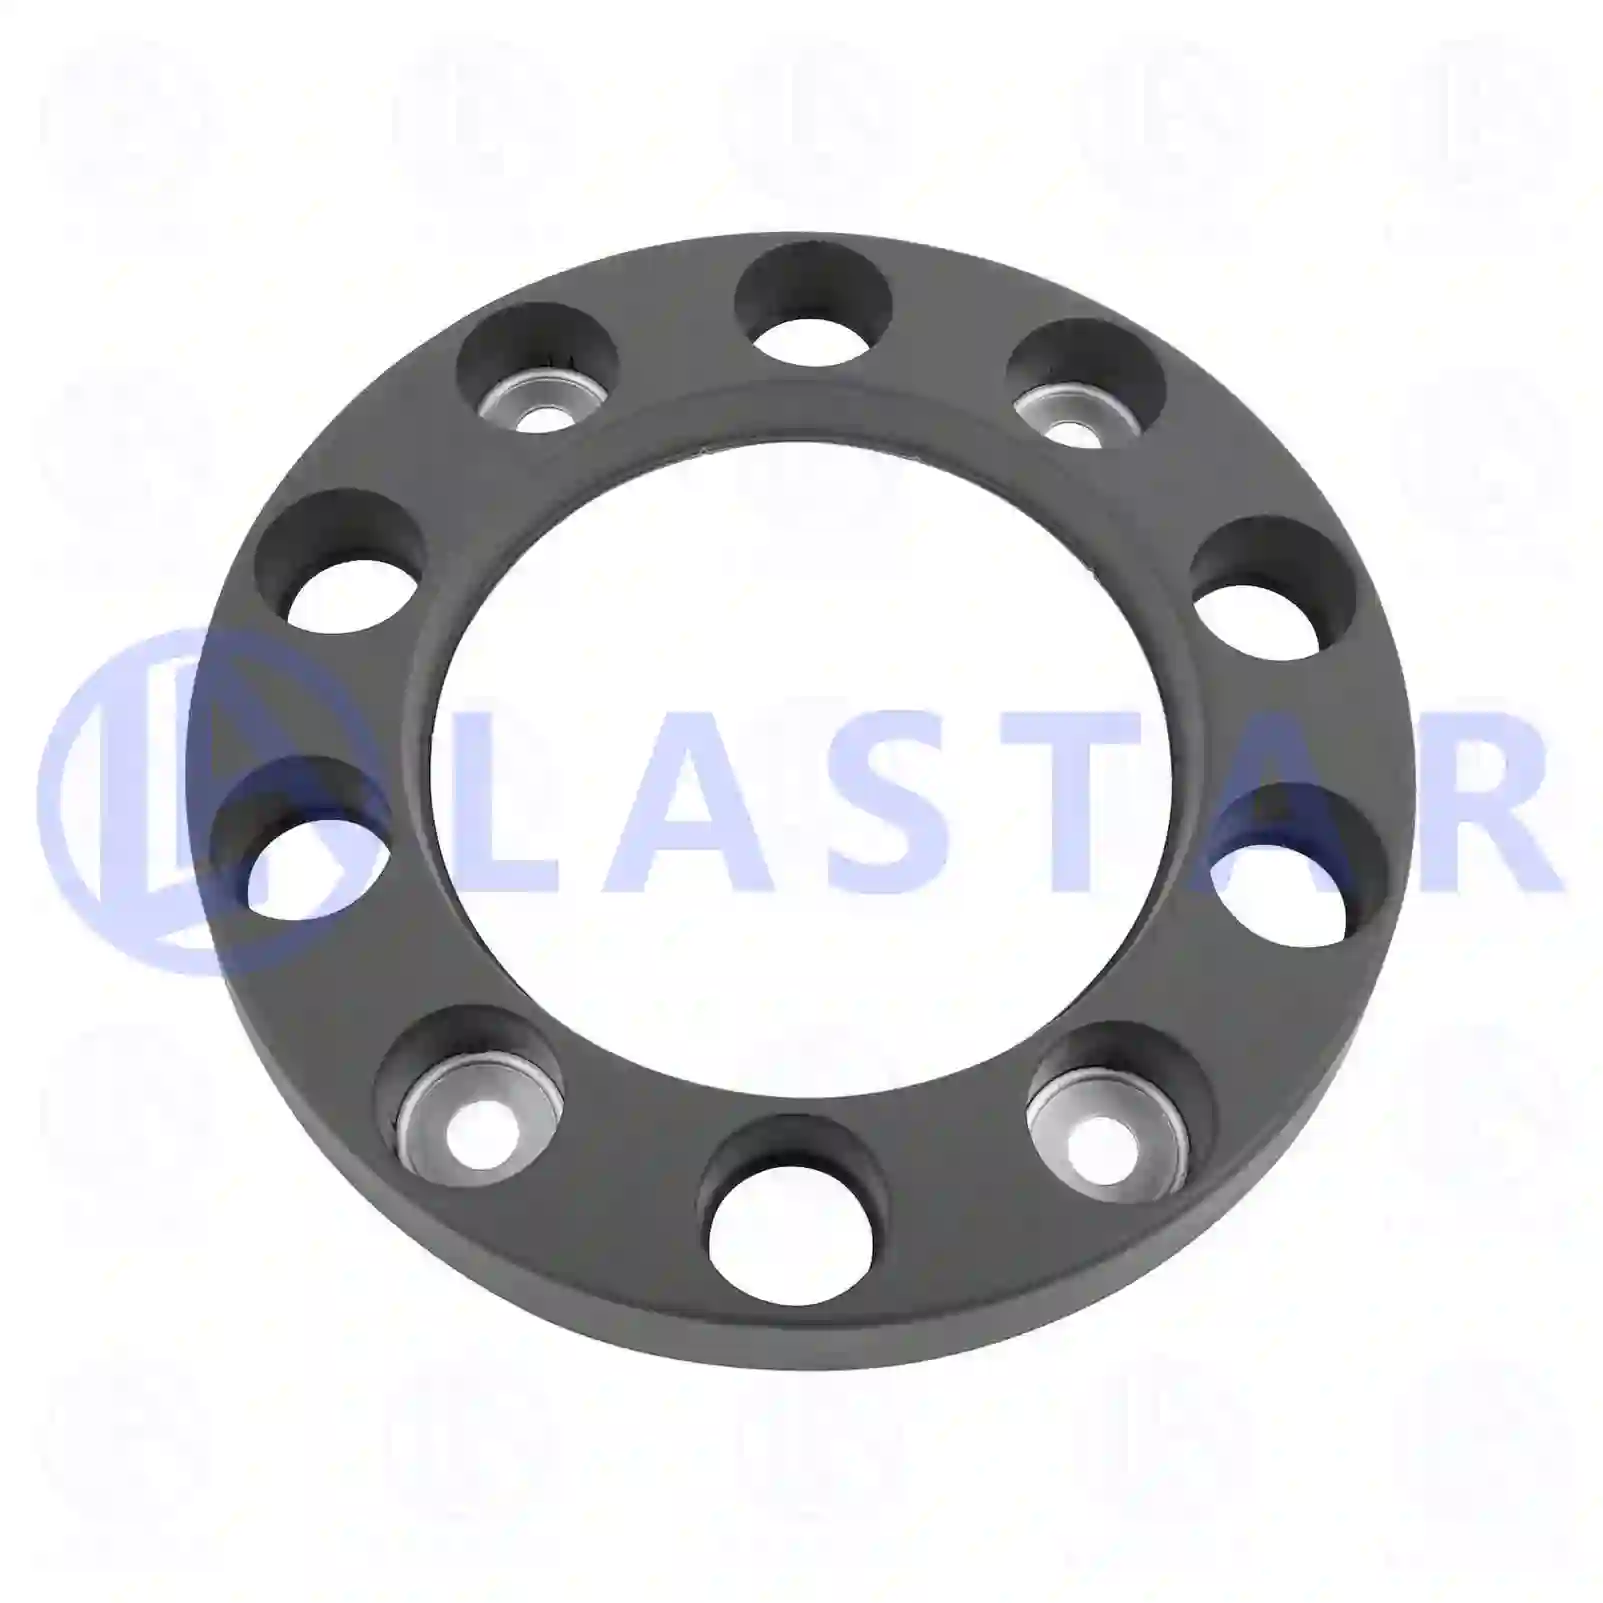  Wheel cover, plastic || Lastar Spare Part | Truck Spare Parts, Auotomotive Spare Parts